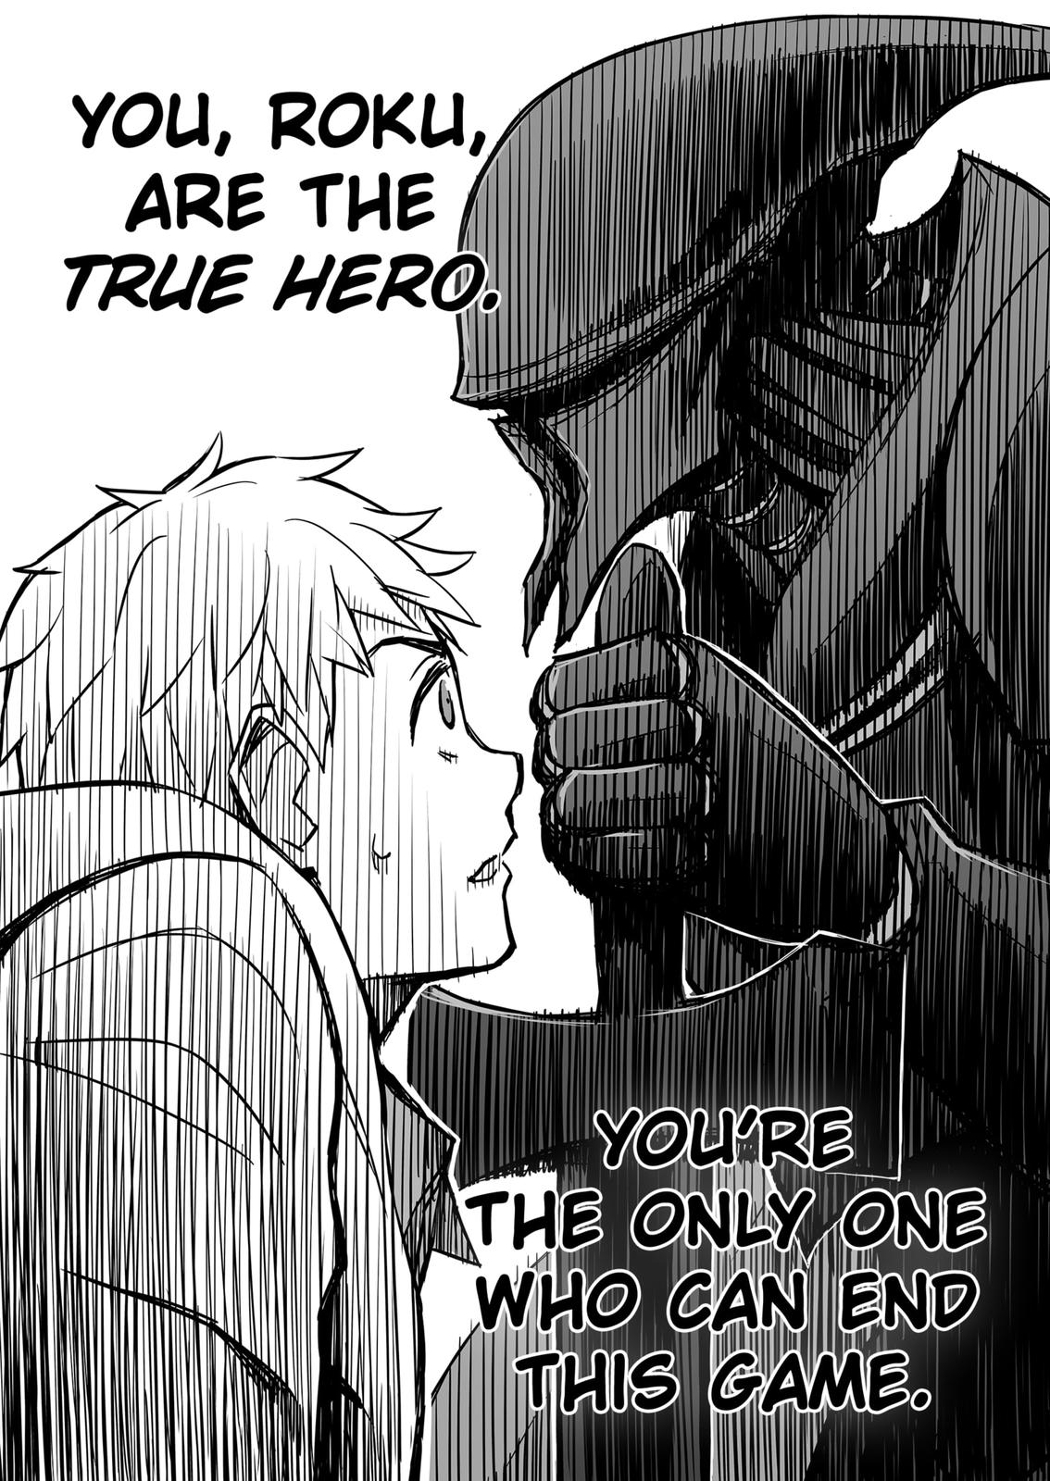 Roku and the Black Knight hero